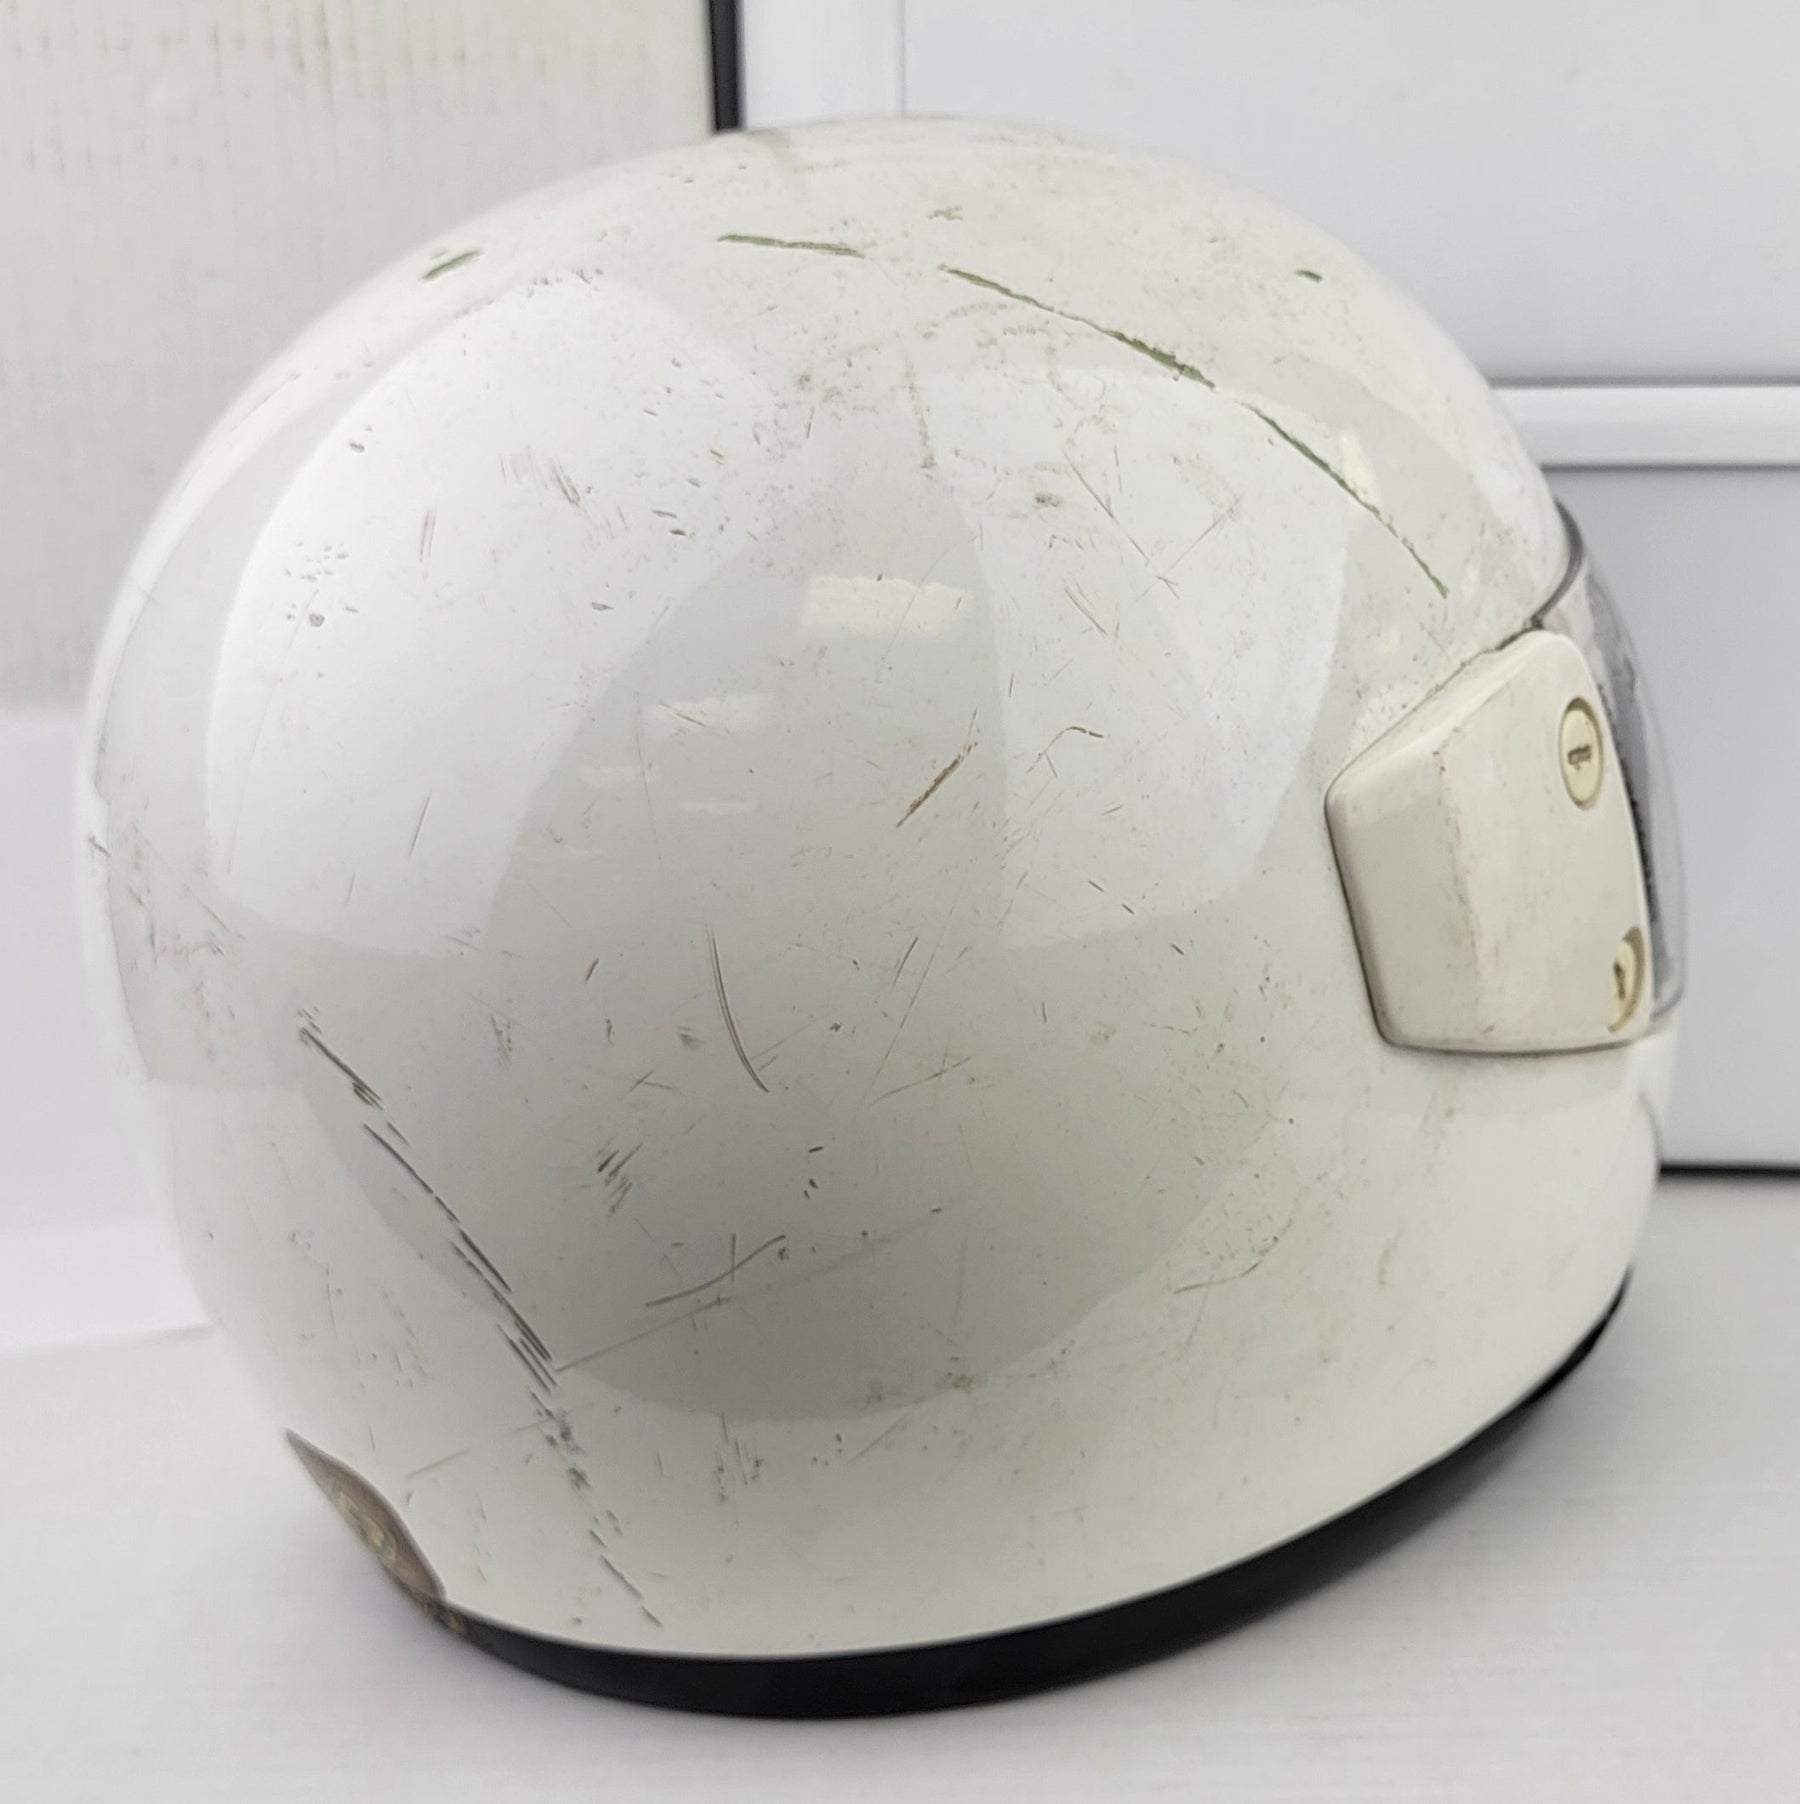 1980s Fimez FM Mod Force One Vintage Motorcycle Helmet